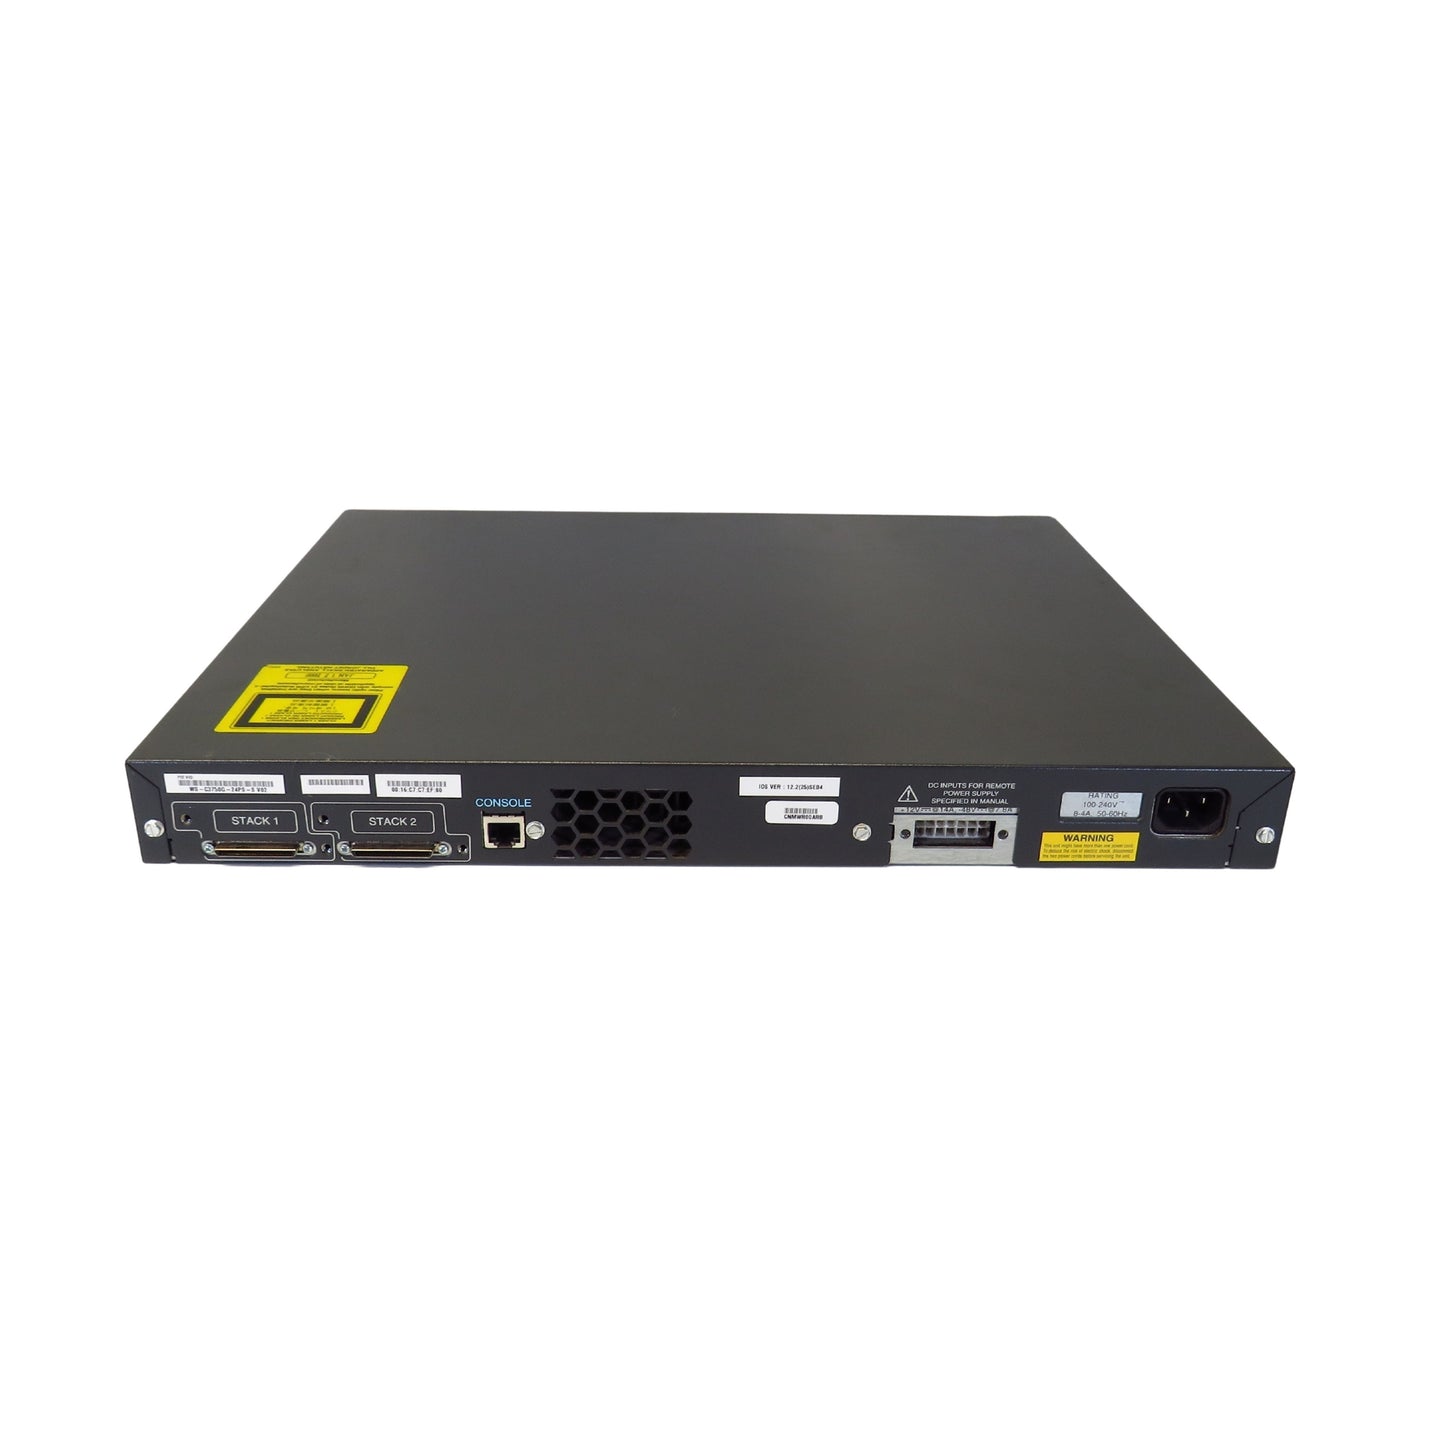 Cisco WS-C3750G-24PS-S Catalyst 3750G 24 Port PoE Gigabit Switch (Refurbished)